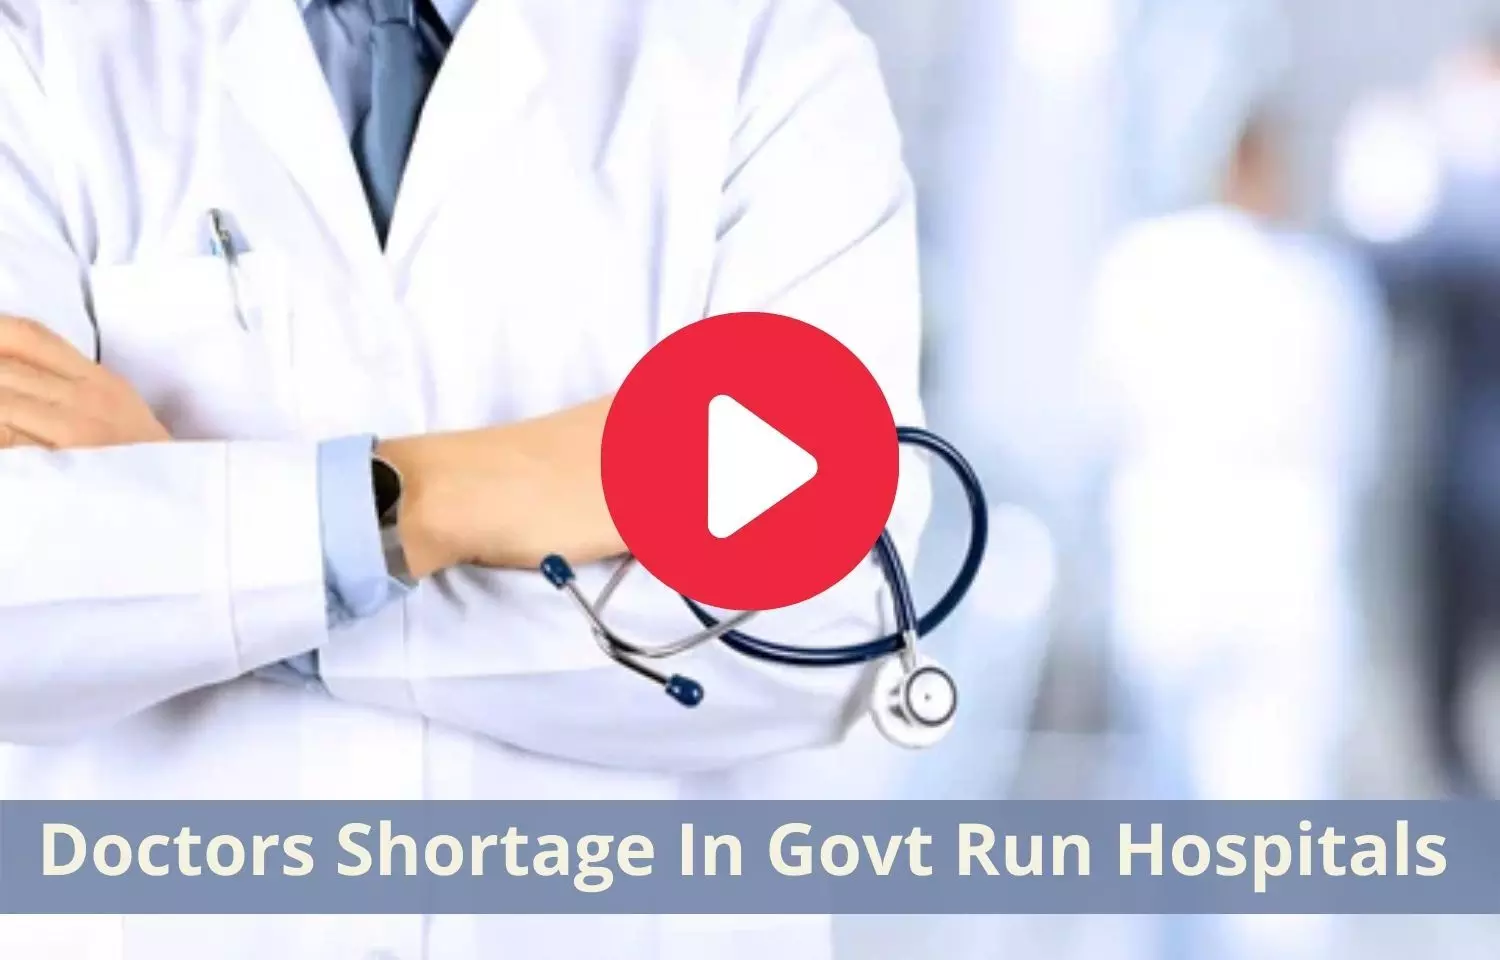 Doctors shortage in govt run hospitals